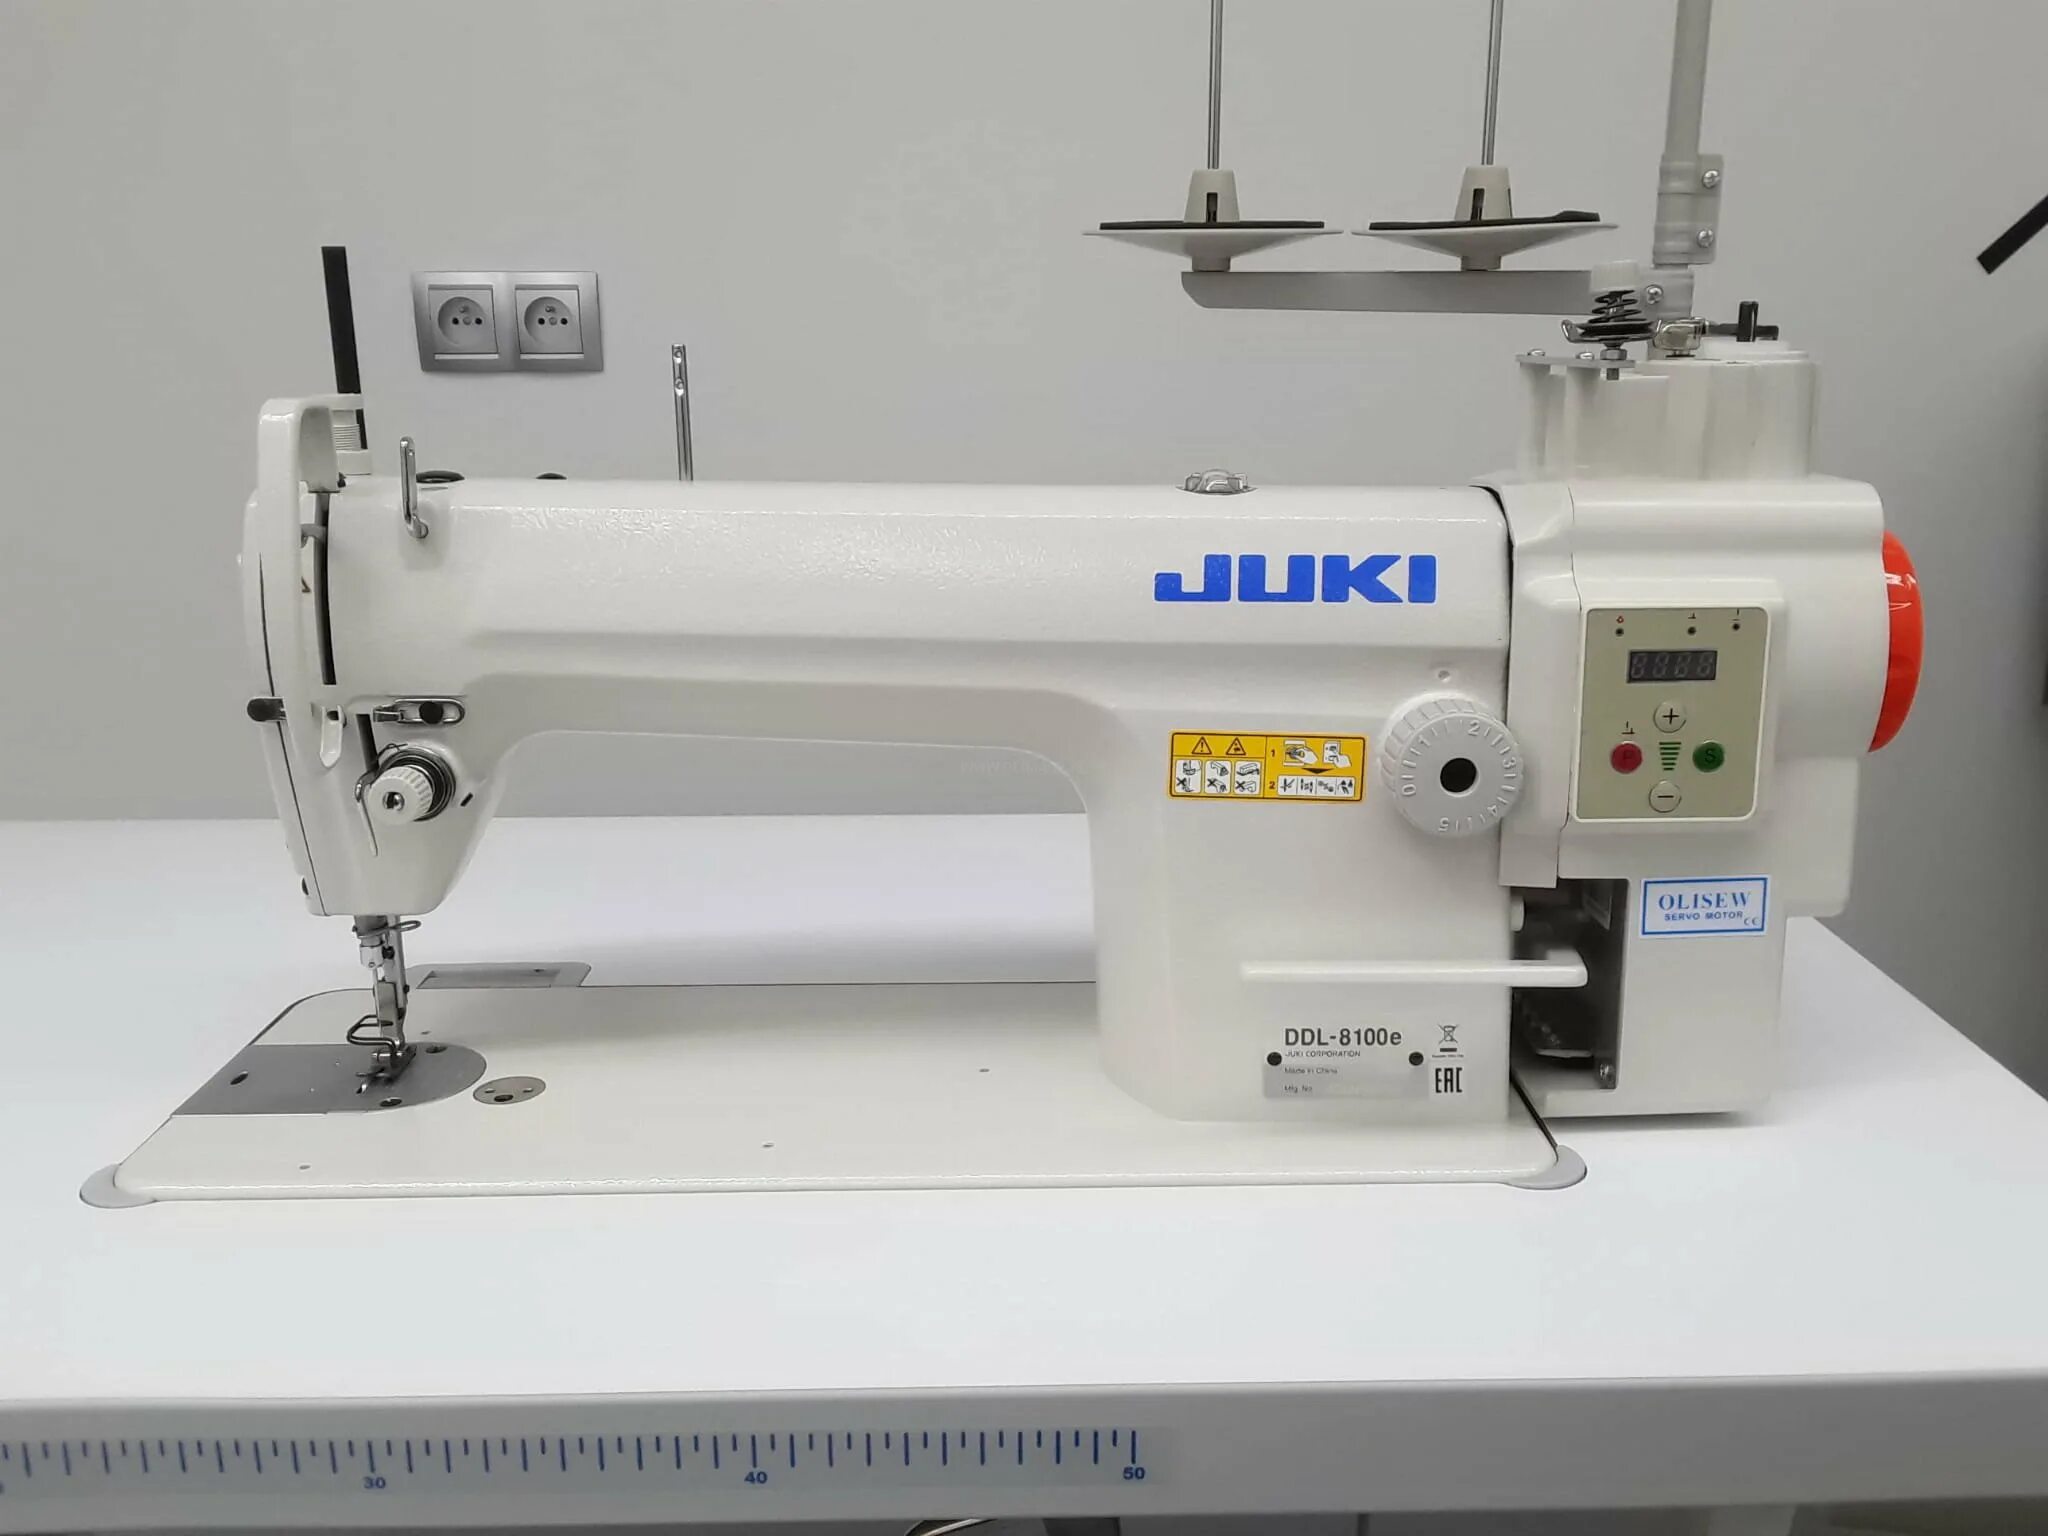 Промышленная машинка juki. Швейная машинка Джуки DDL 8100. Швейная машина Промышленная Juki DDL-8100e. Швейная машина Juki DDL-8100e. Juki DDL-8700.